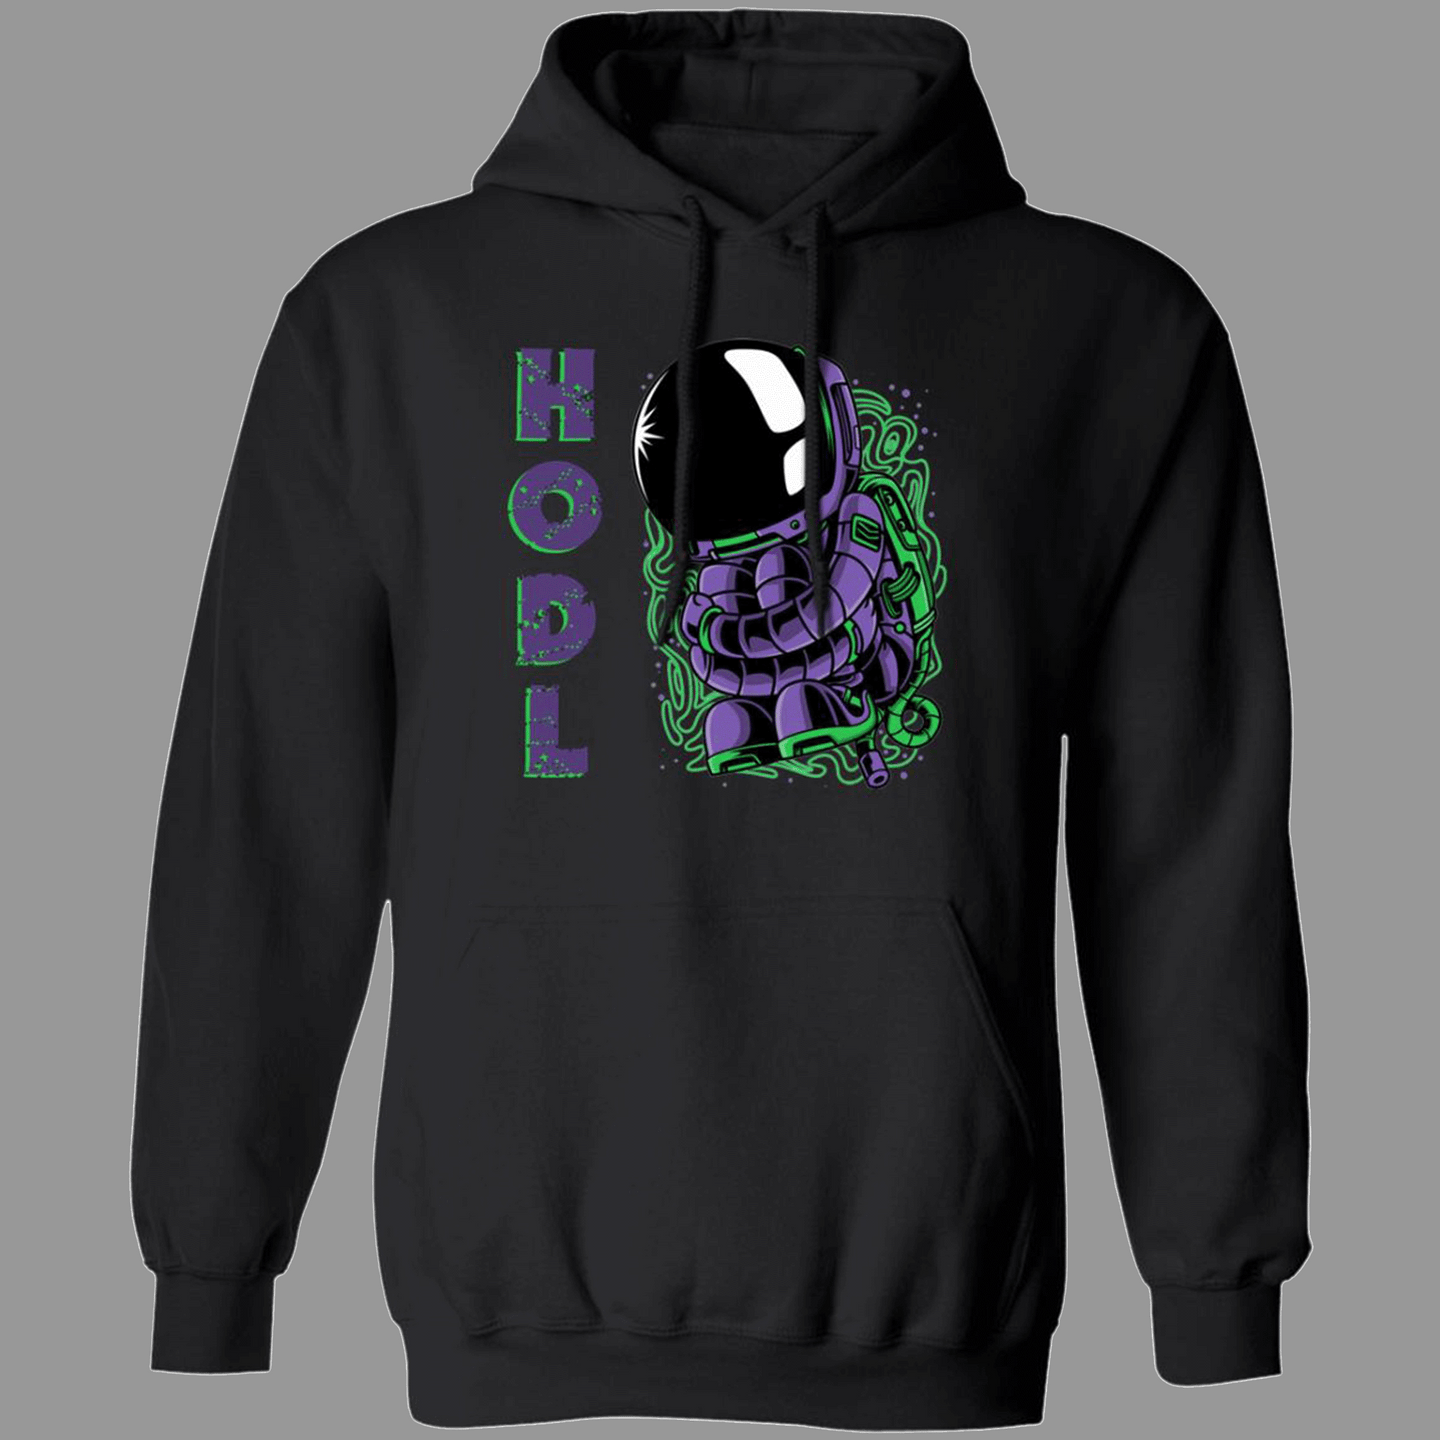 HODLnaut - Pullover Hoodies & Sweatshirts